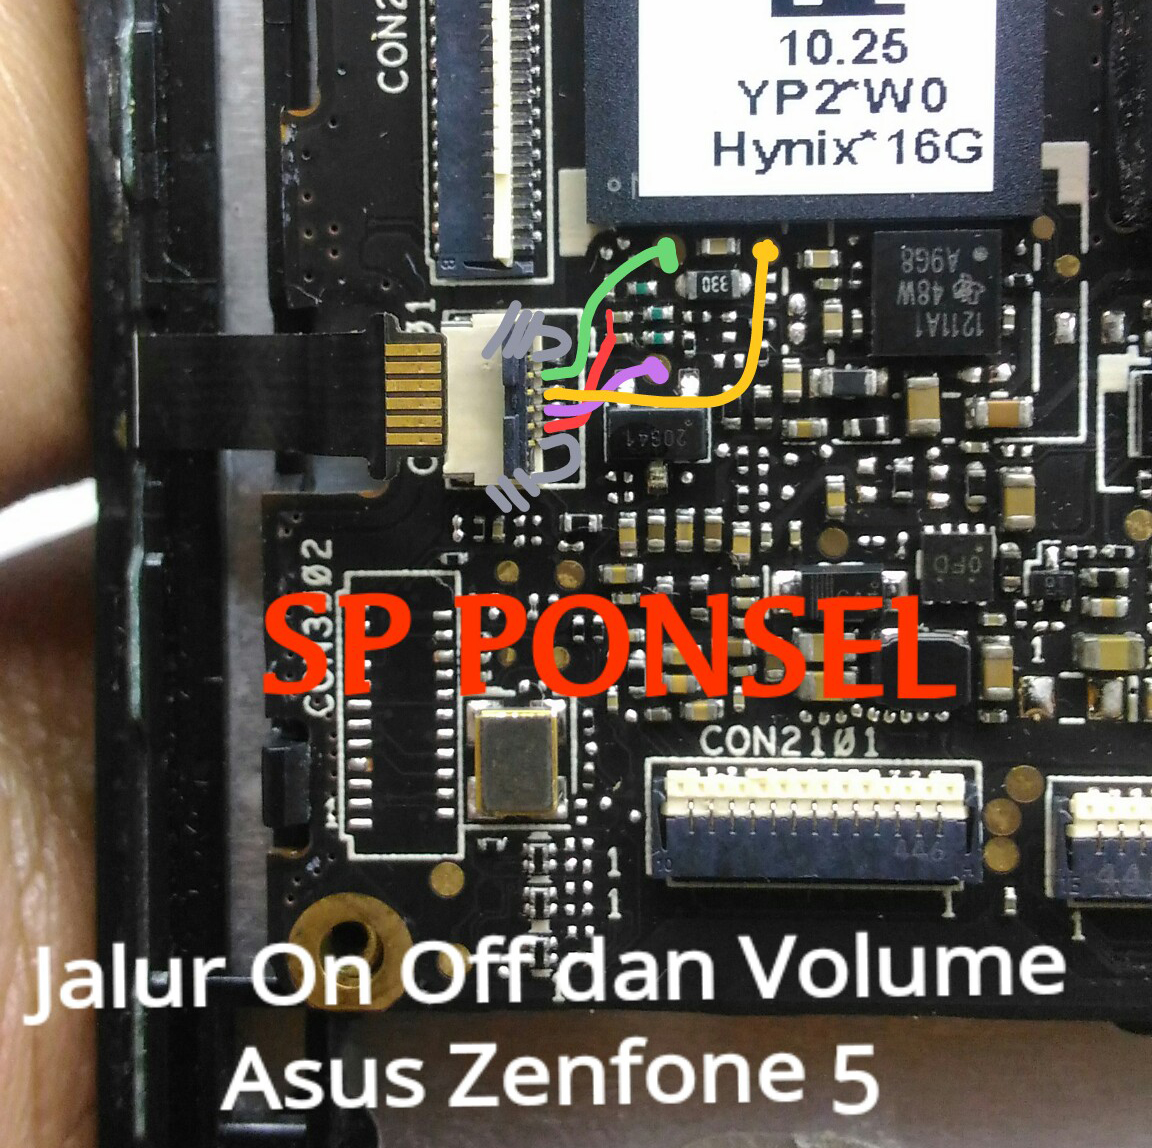 Asus Zenfone 5 Volume Up Down Keys Not Working Problem Solution Jumpers